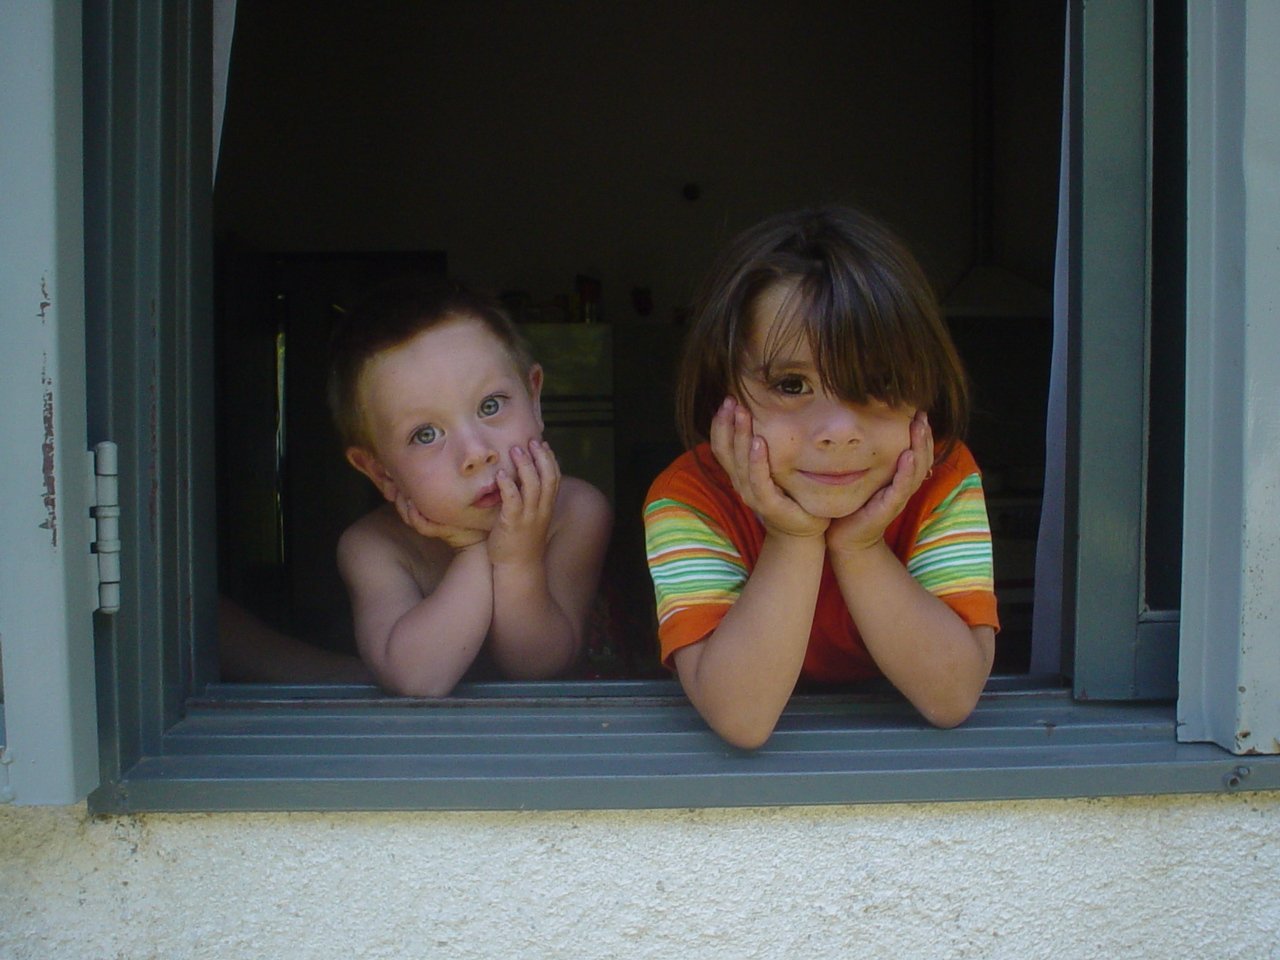 Two kids looking out open window. Photo by Mario Rassi: https://bit.ly/2WA1aIz